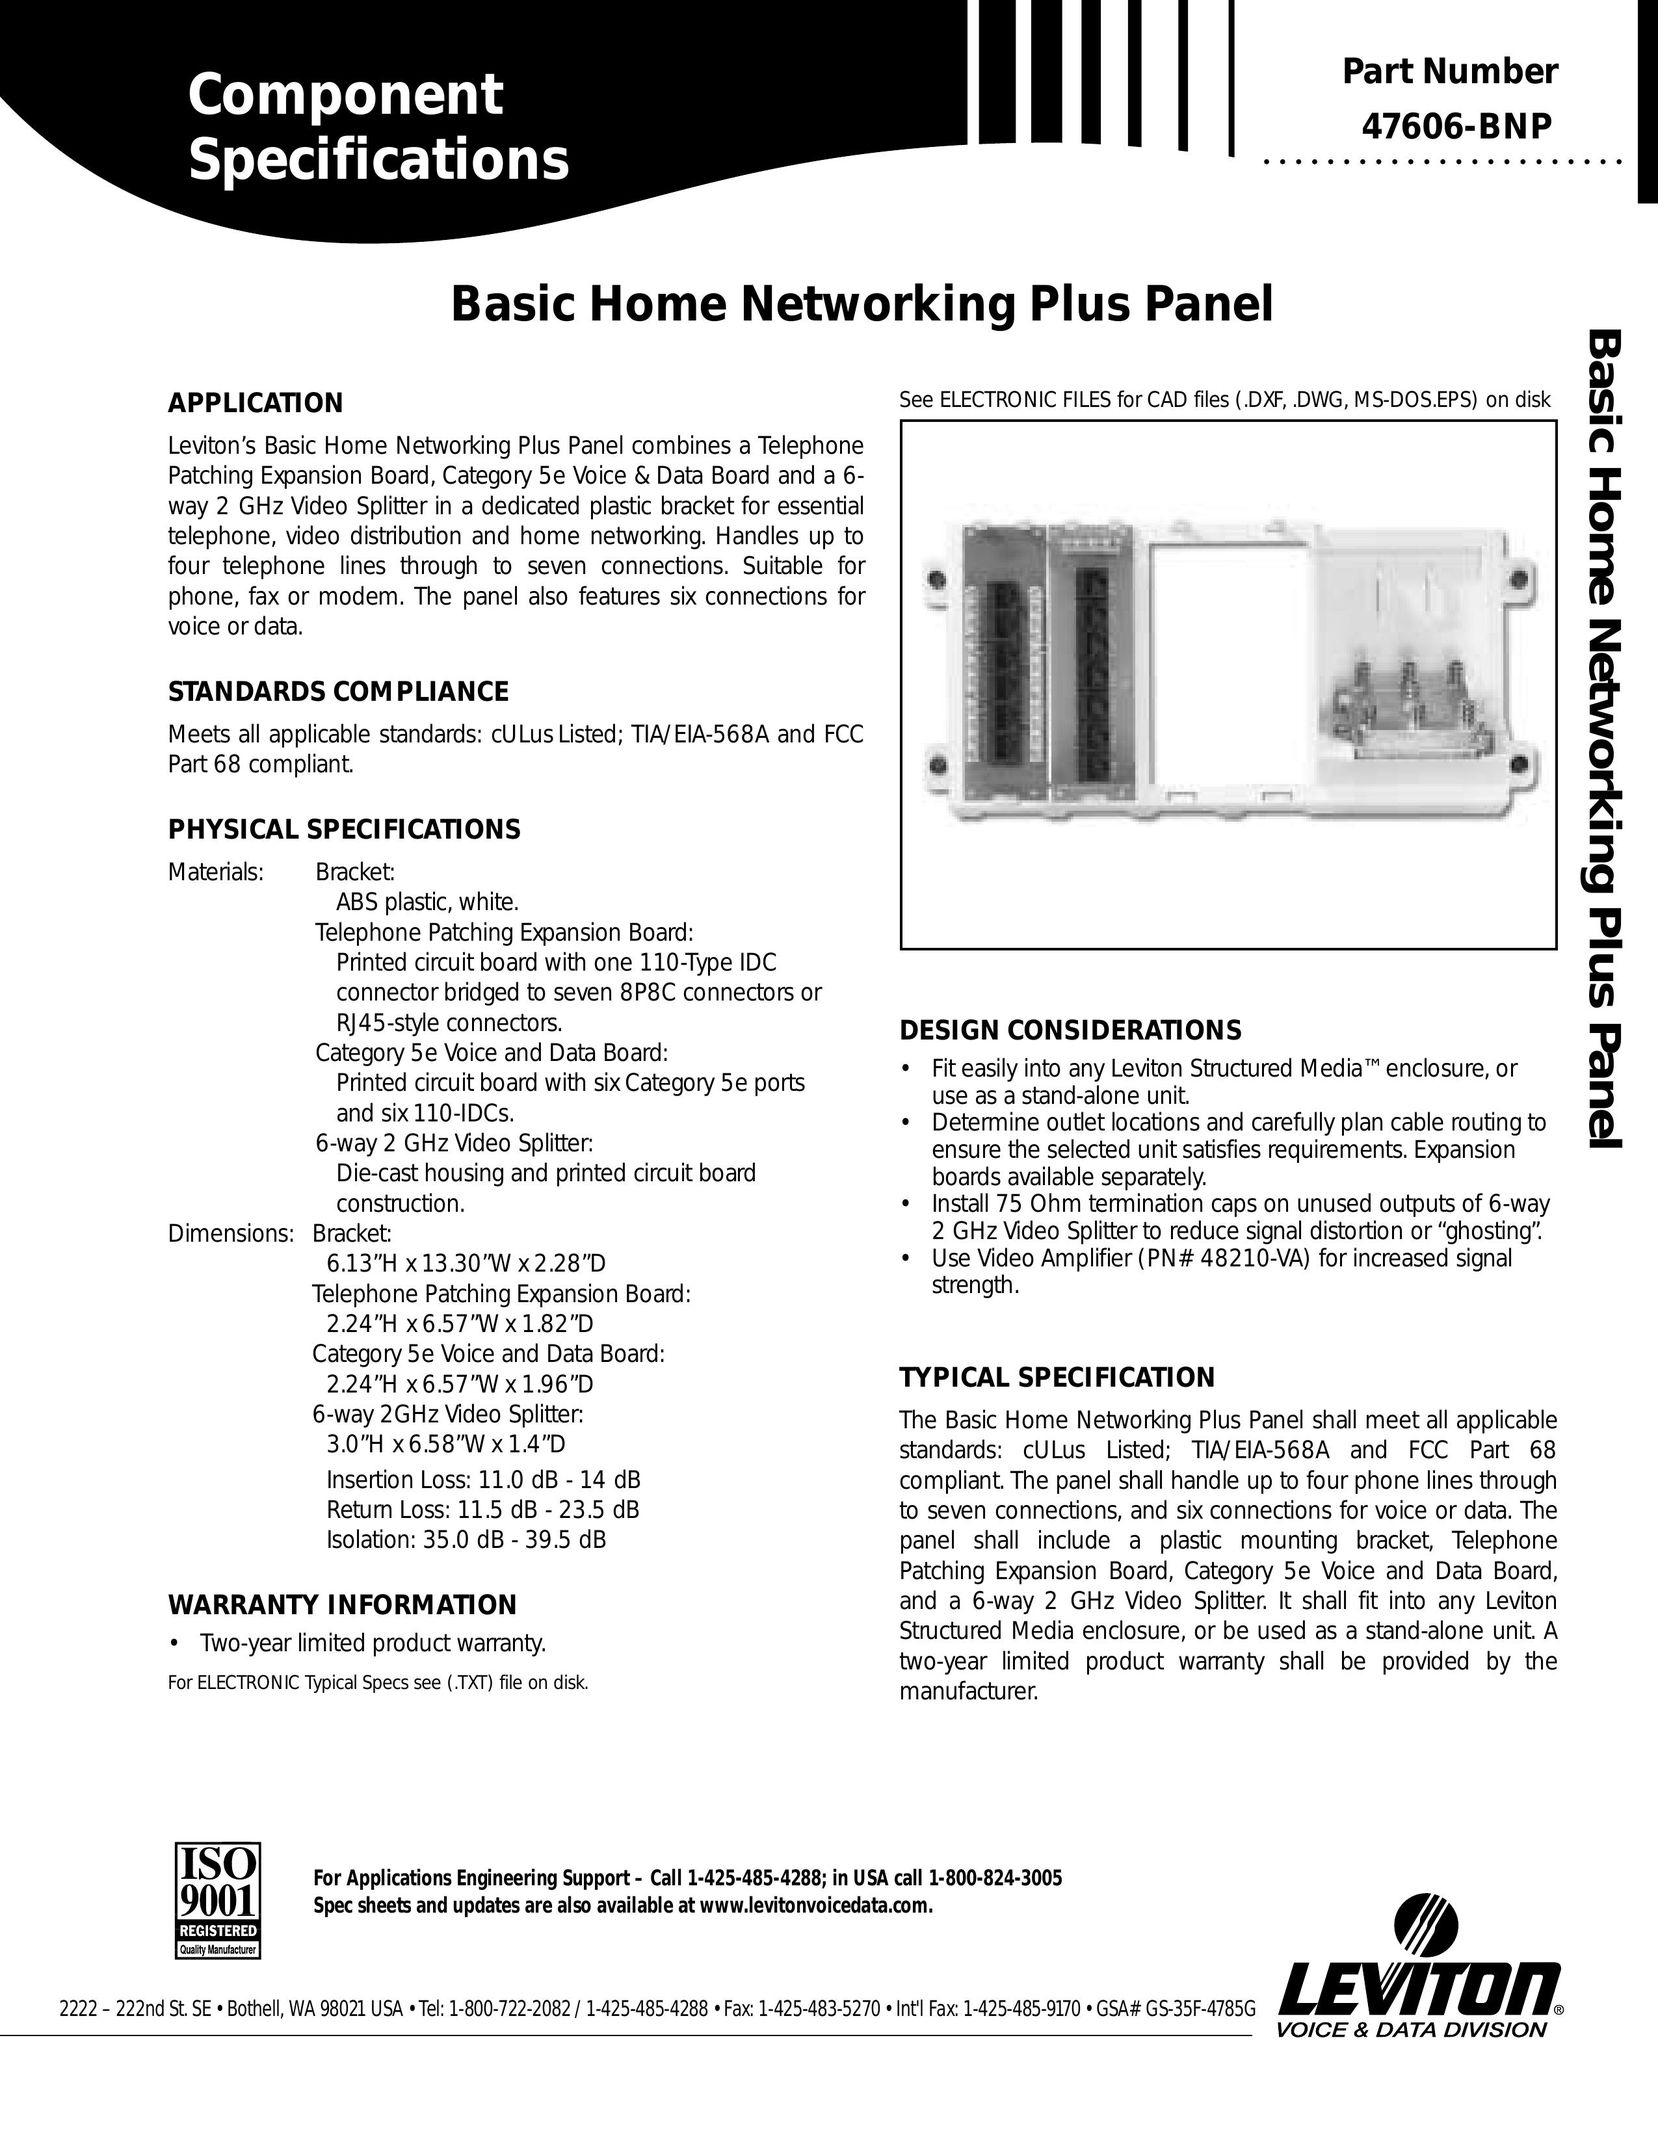 HomeTech 47606-BNP Network Router User Manual